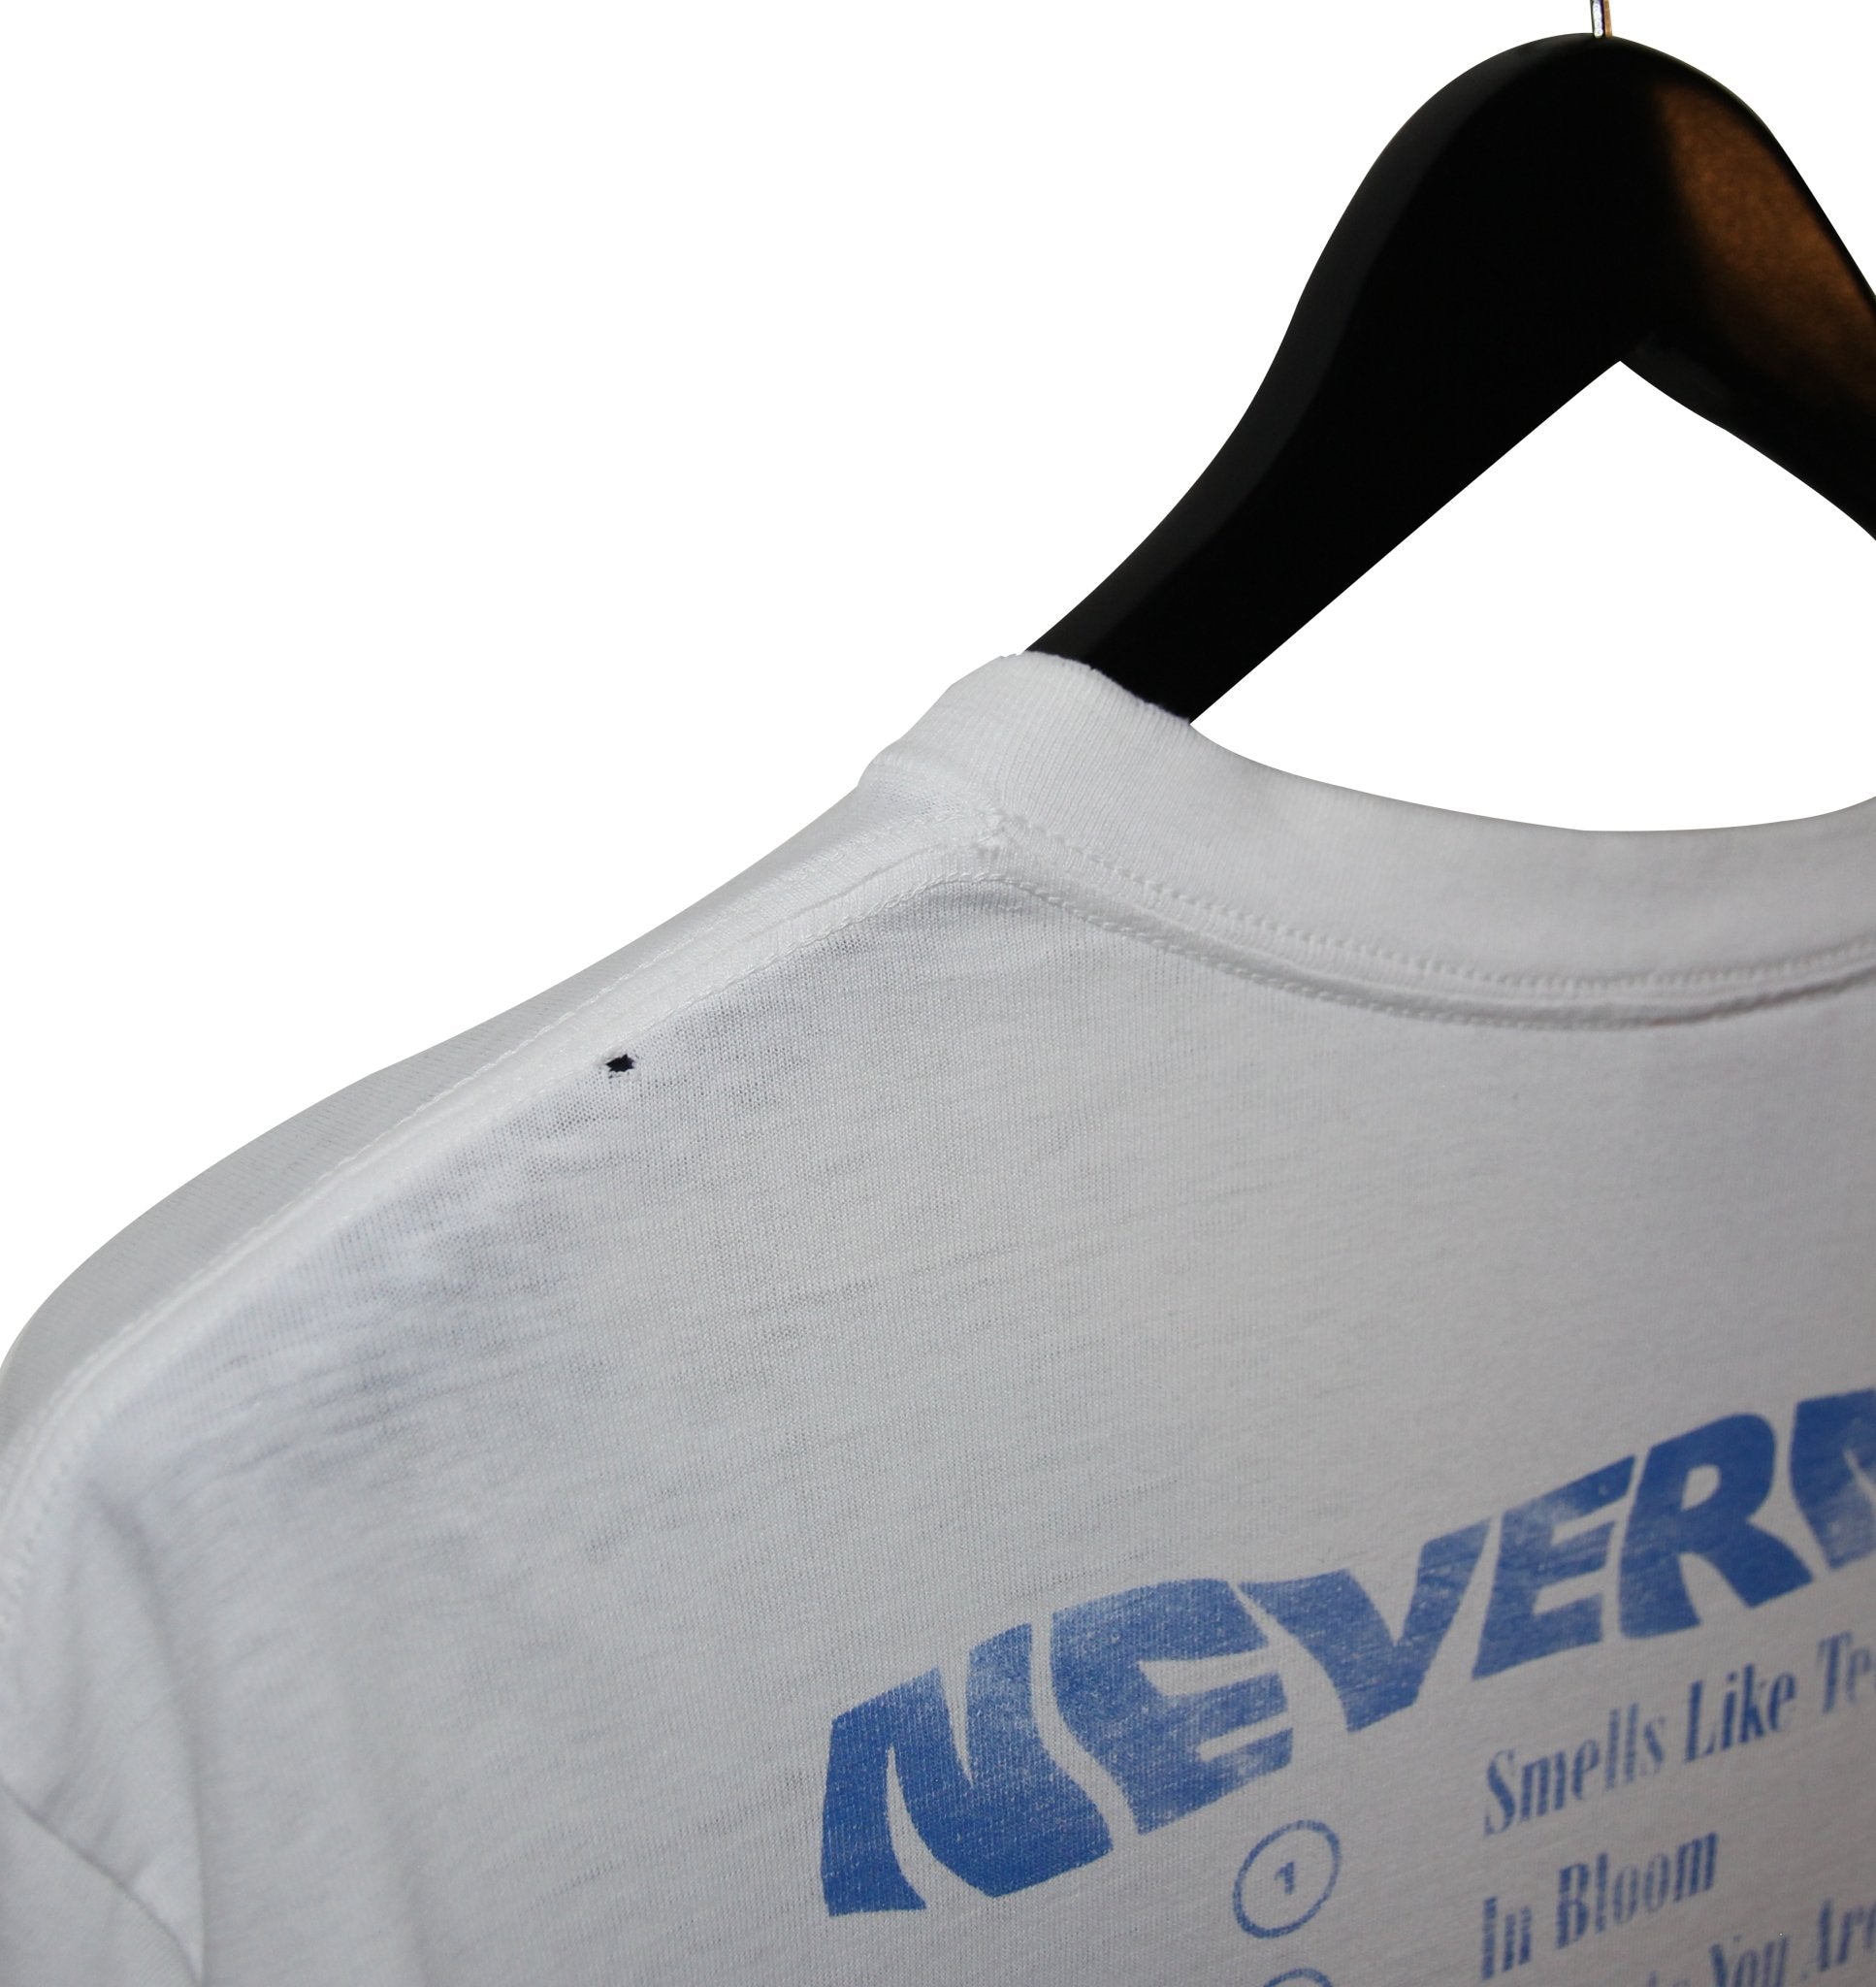 Nirvana 1993 Nevermind Album Shirt - Faded AU